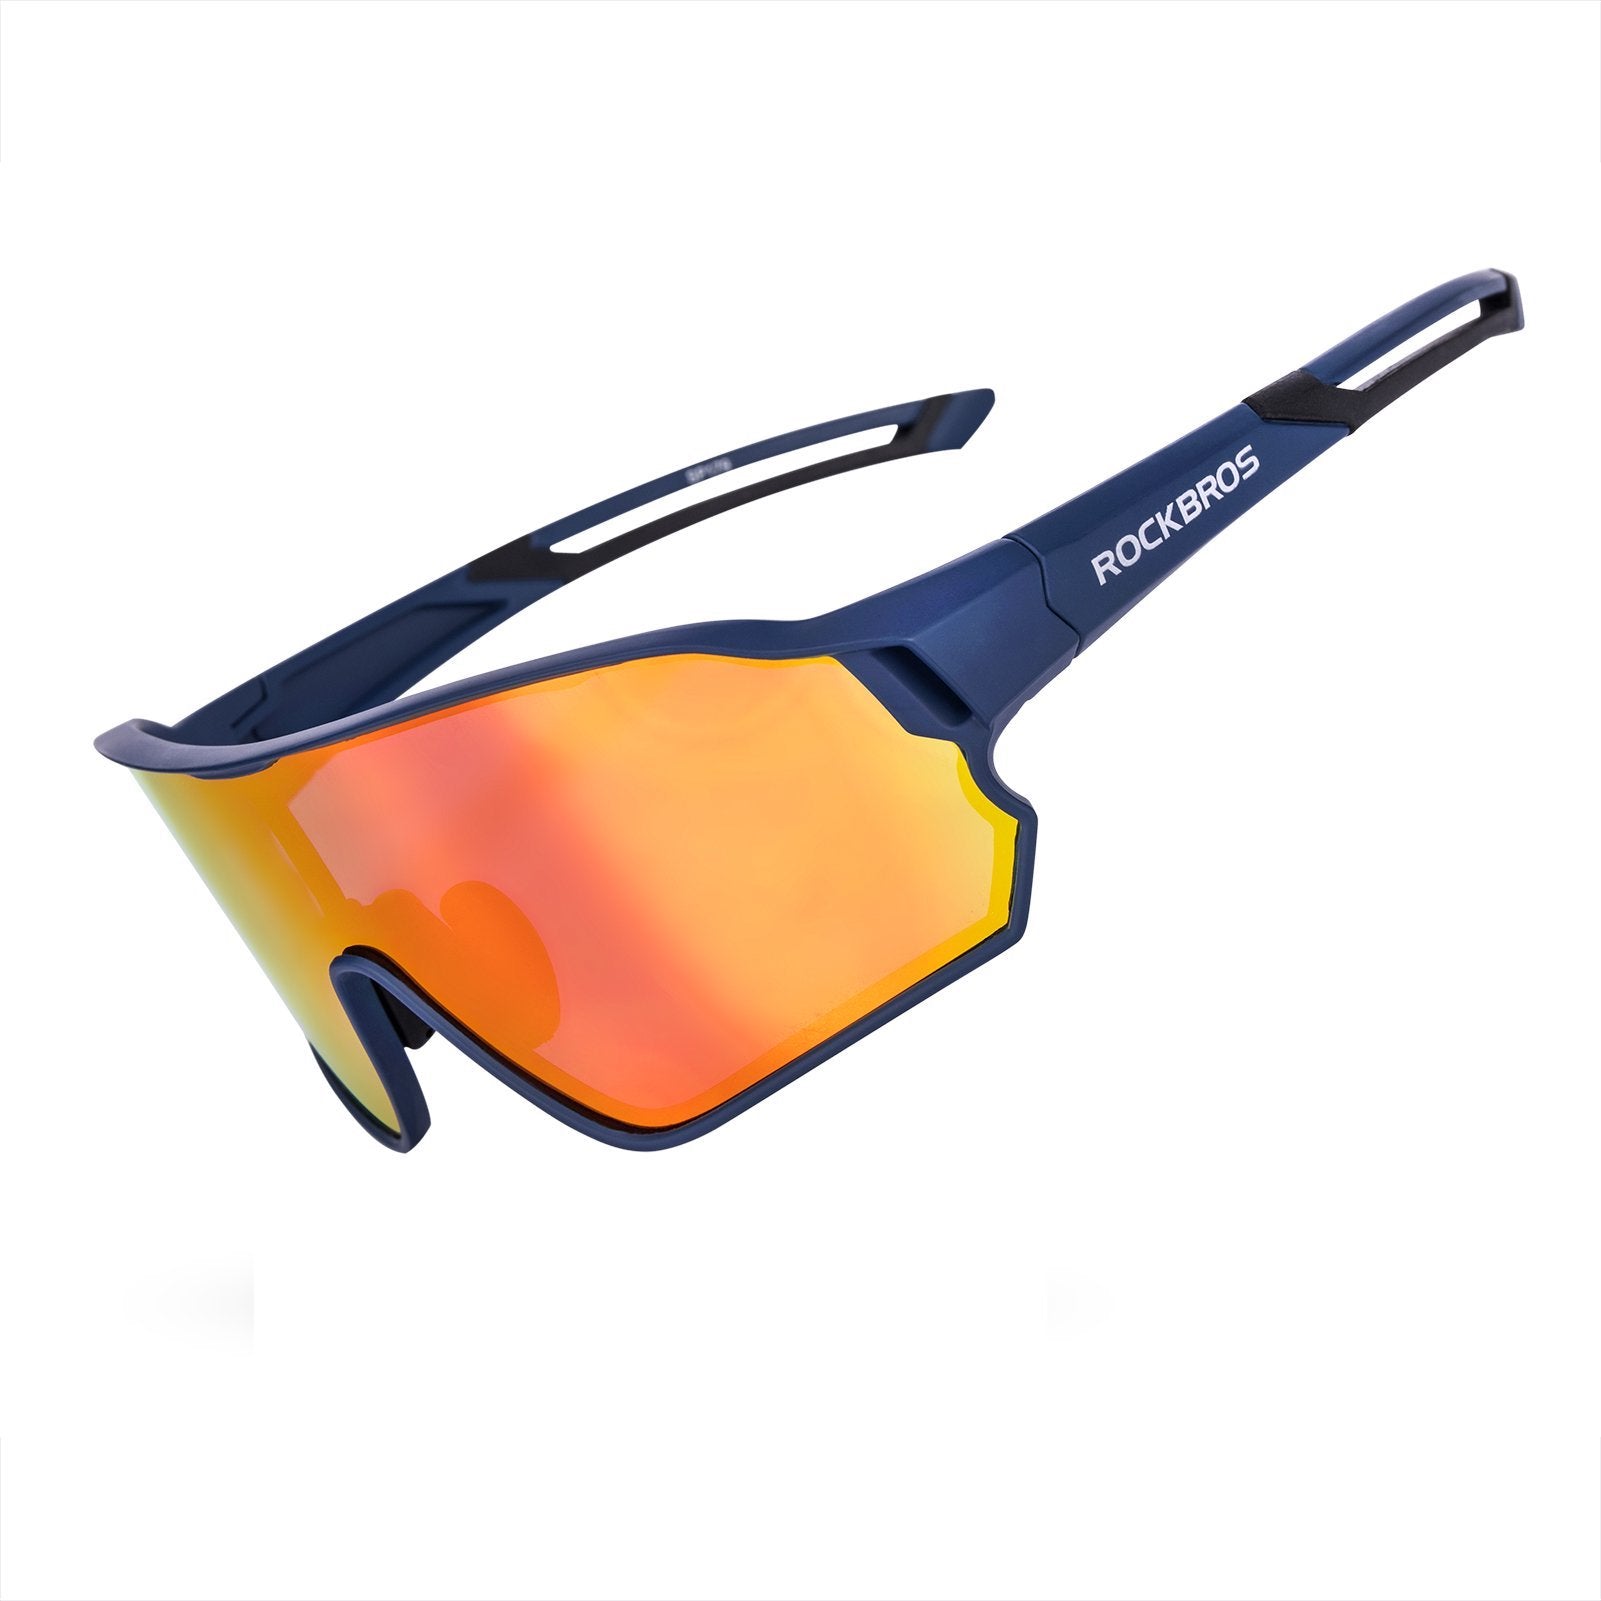 ROCKBROS Polarised Full Lens Sunglasses Cycling Bicycle Glasses Outdoor Sports Eyewear Uv400, Blue